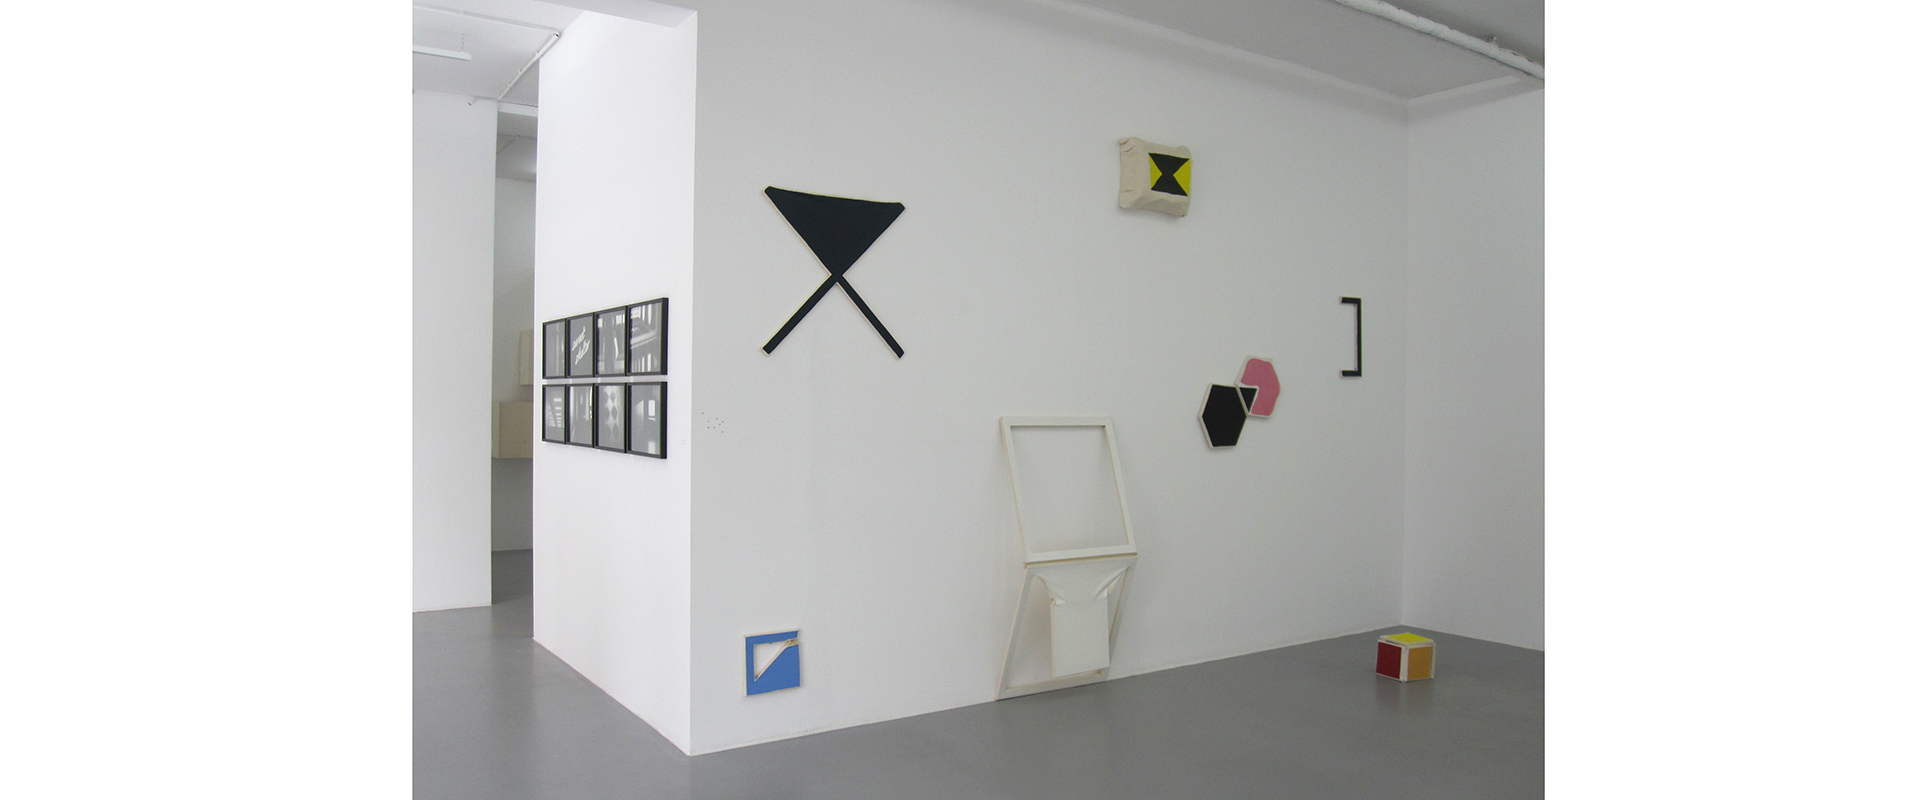 Bender Schwinn Projekt 1, Galerie Renate Bender 2016